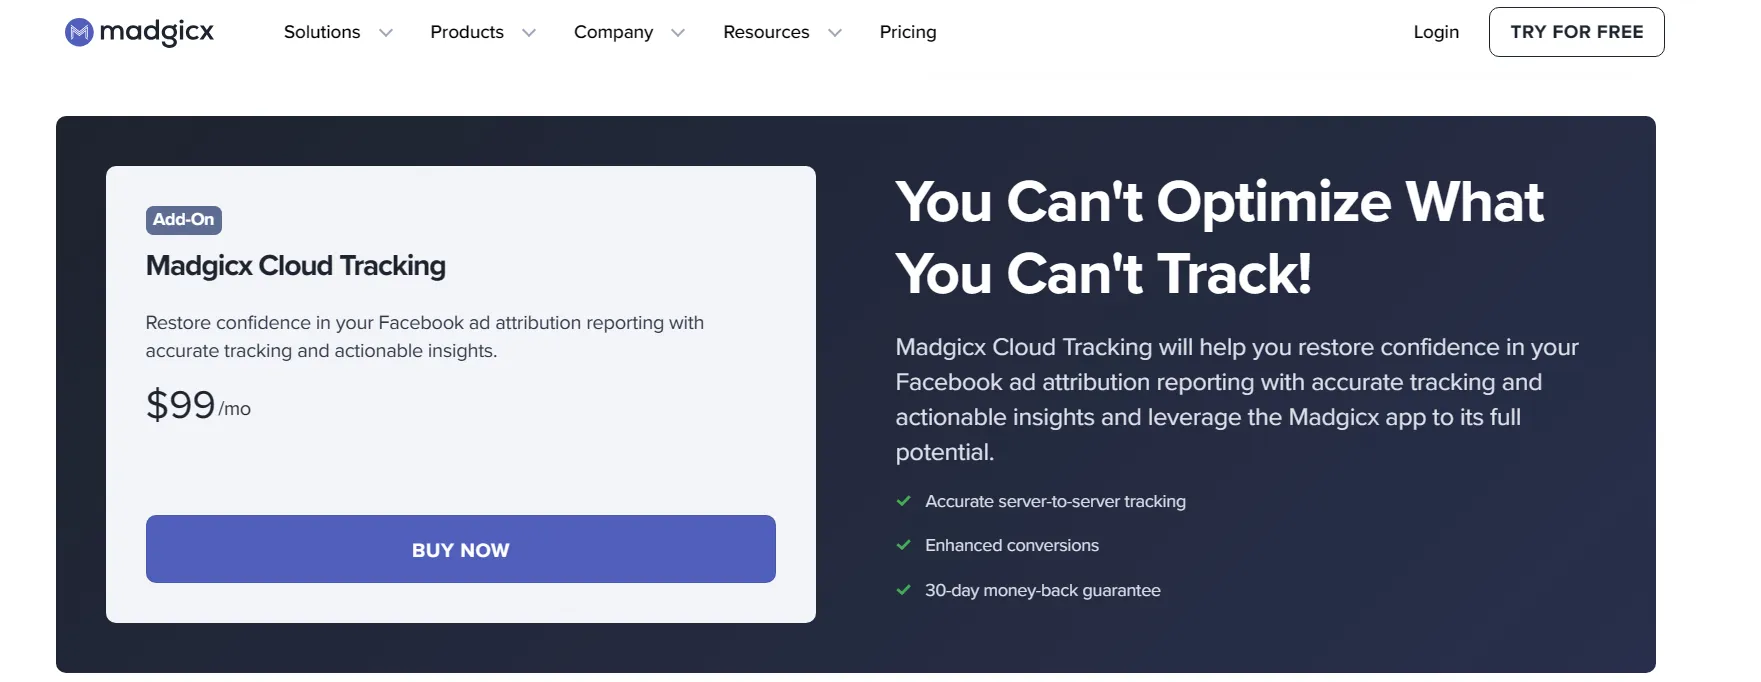 Madgicx Cloud Tracking